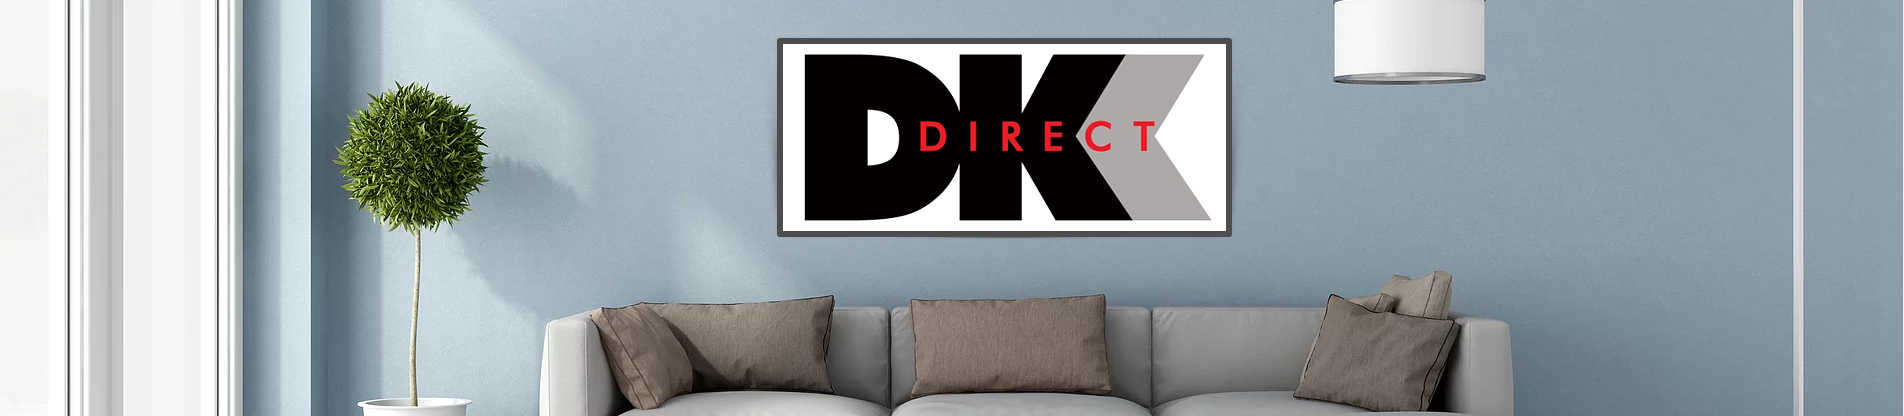 DK Direct